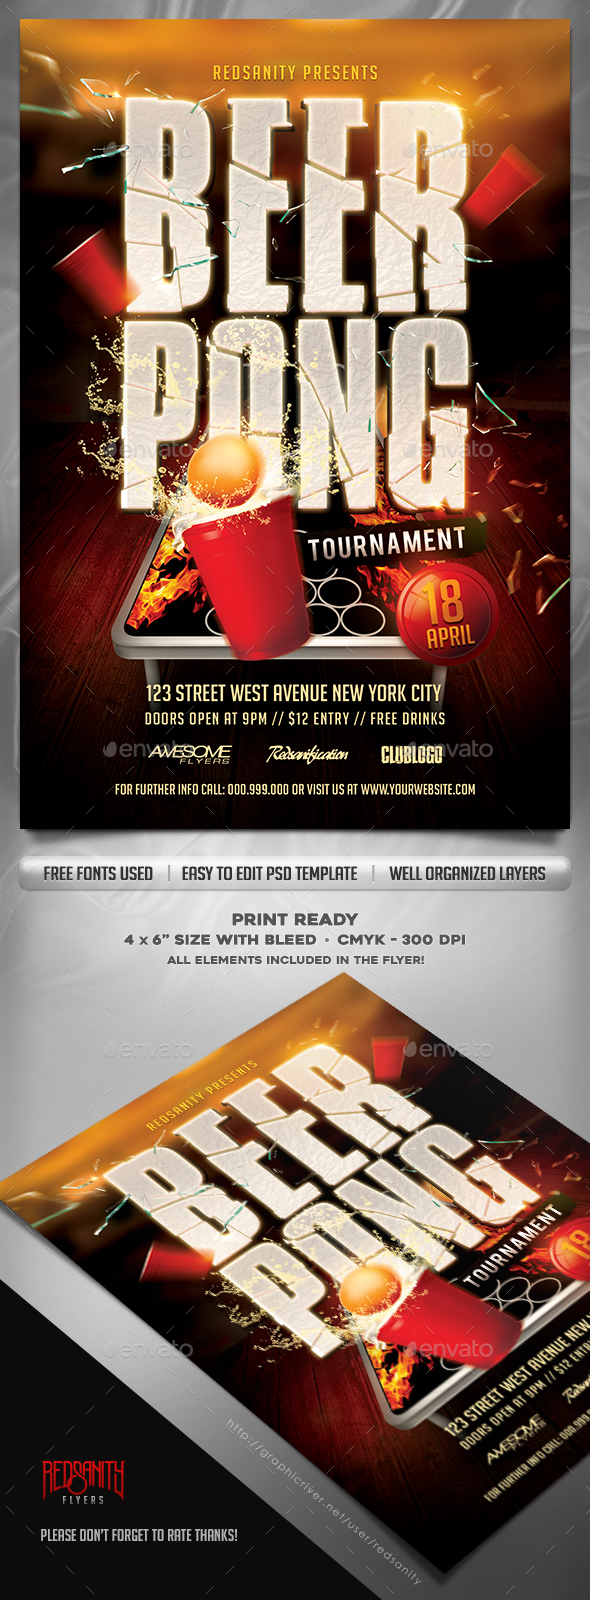 Beer Pong Tournament Flyer Template